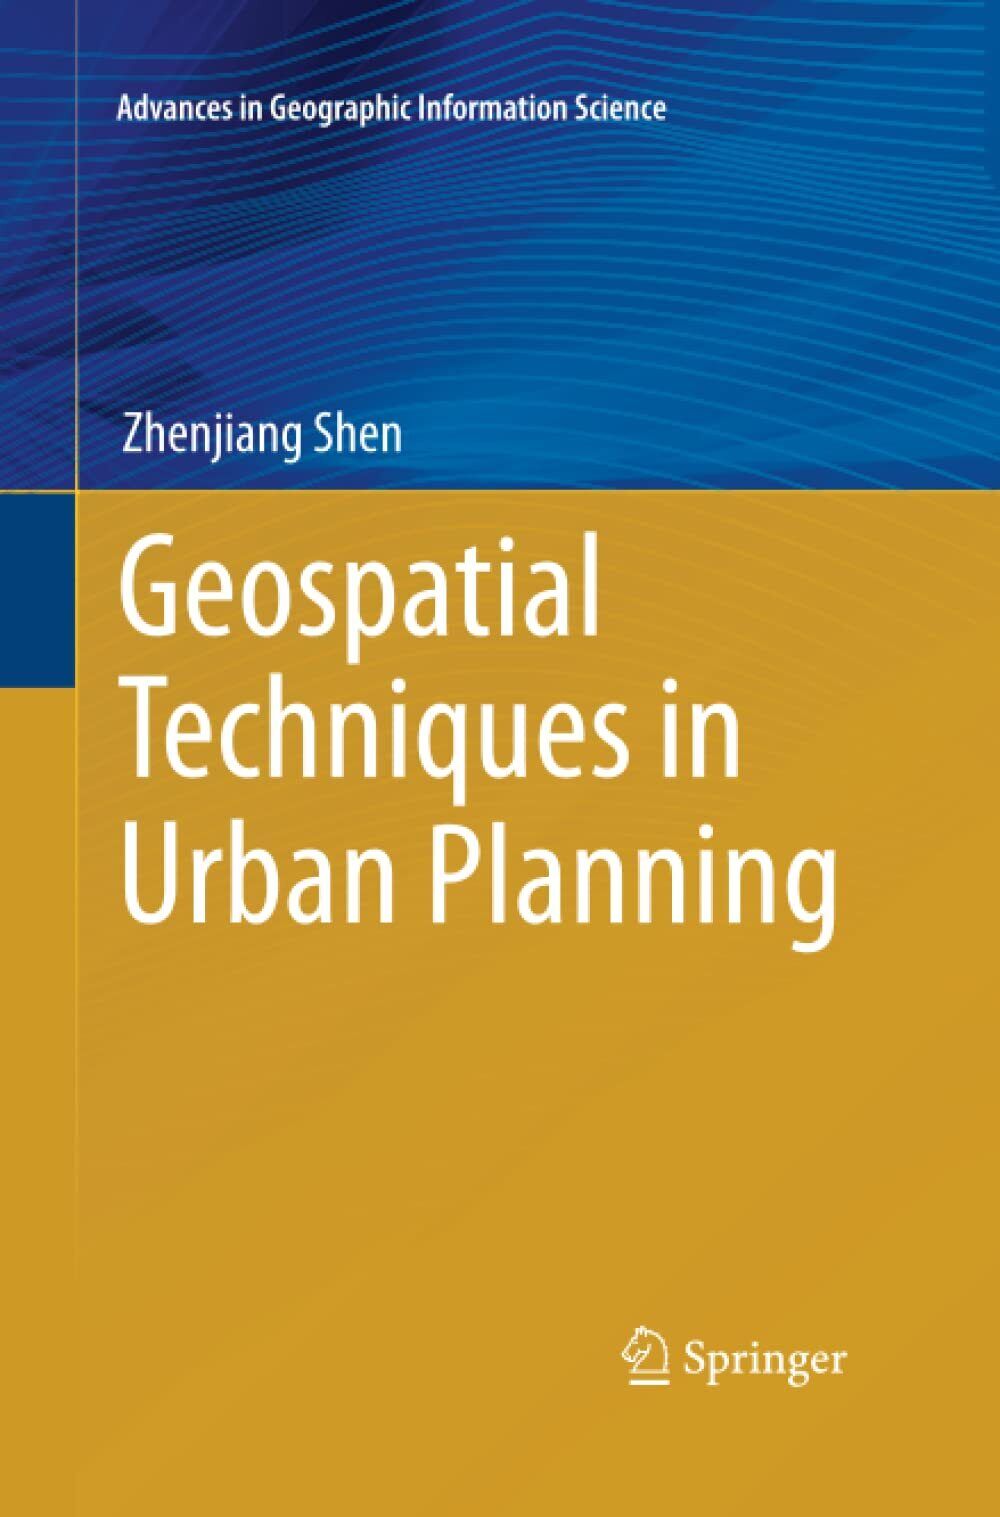 Geospatial Techniques in Urban Planning - Zhenjiang Shen - Springer, 2016